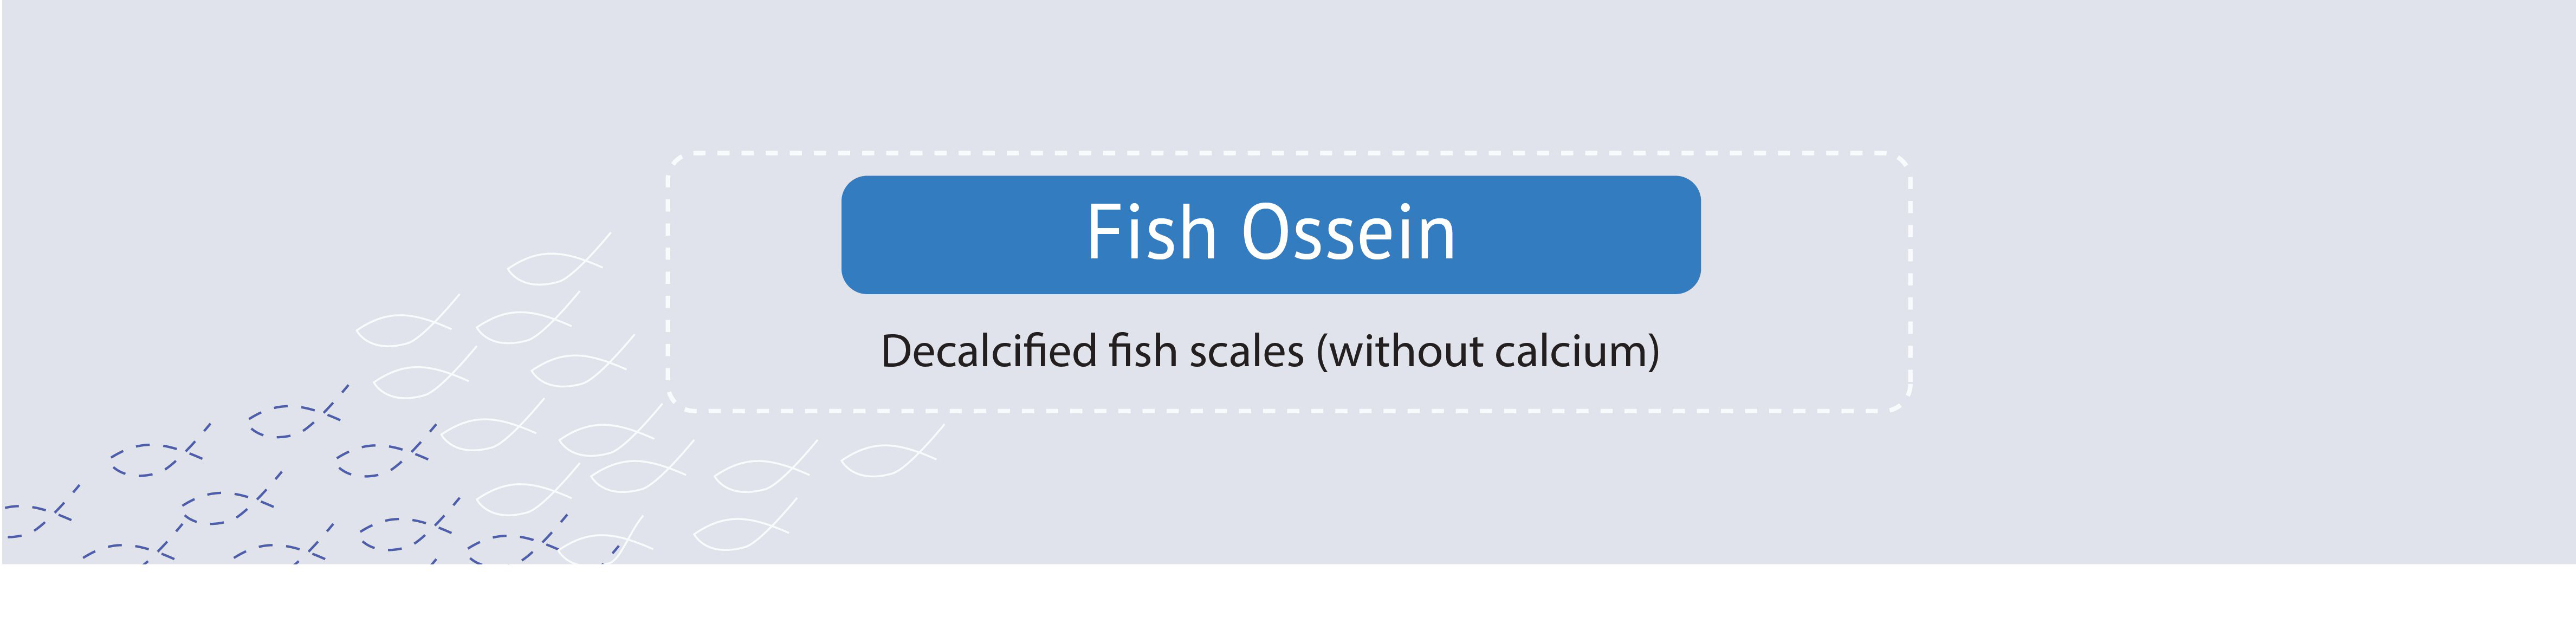 fish-ossein